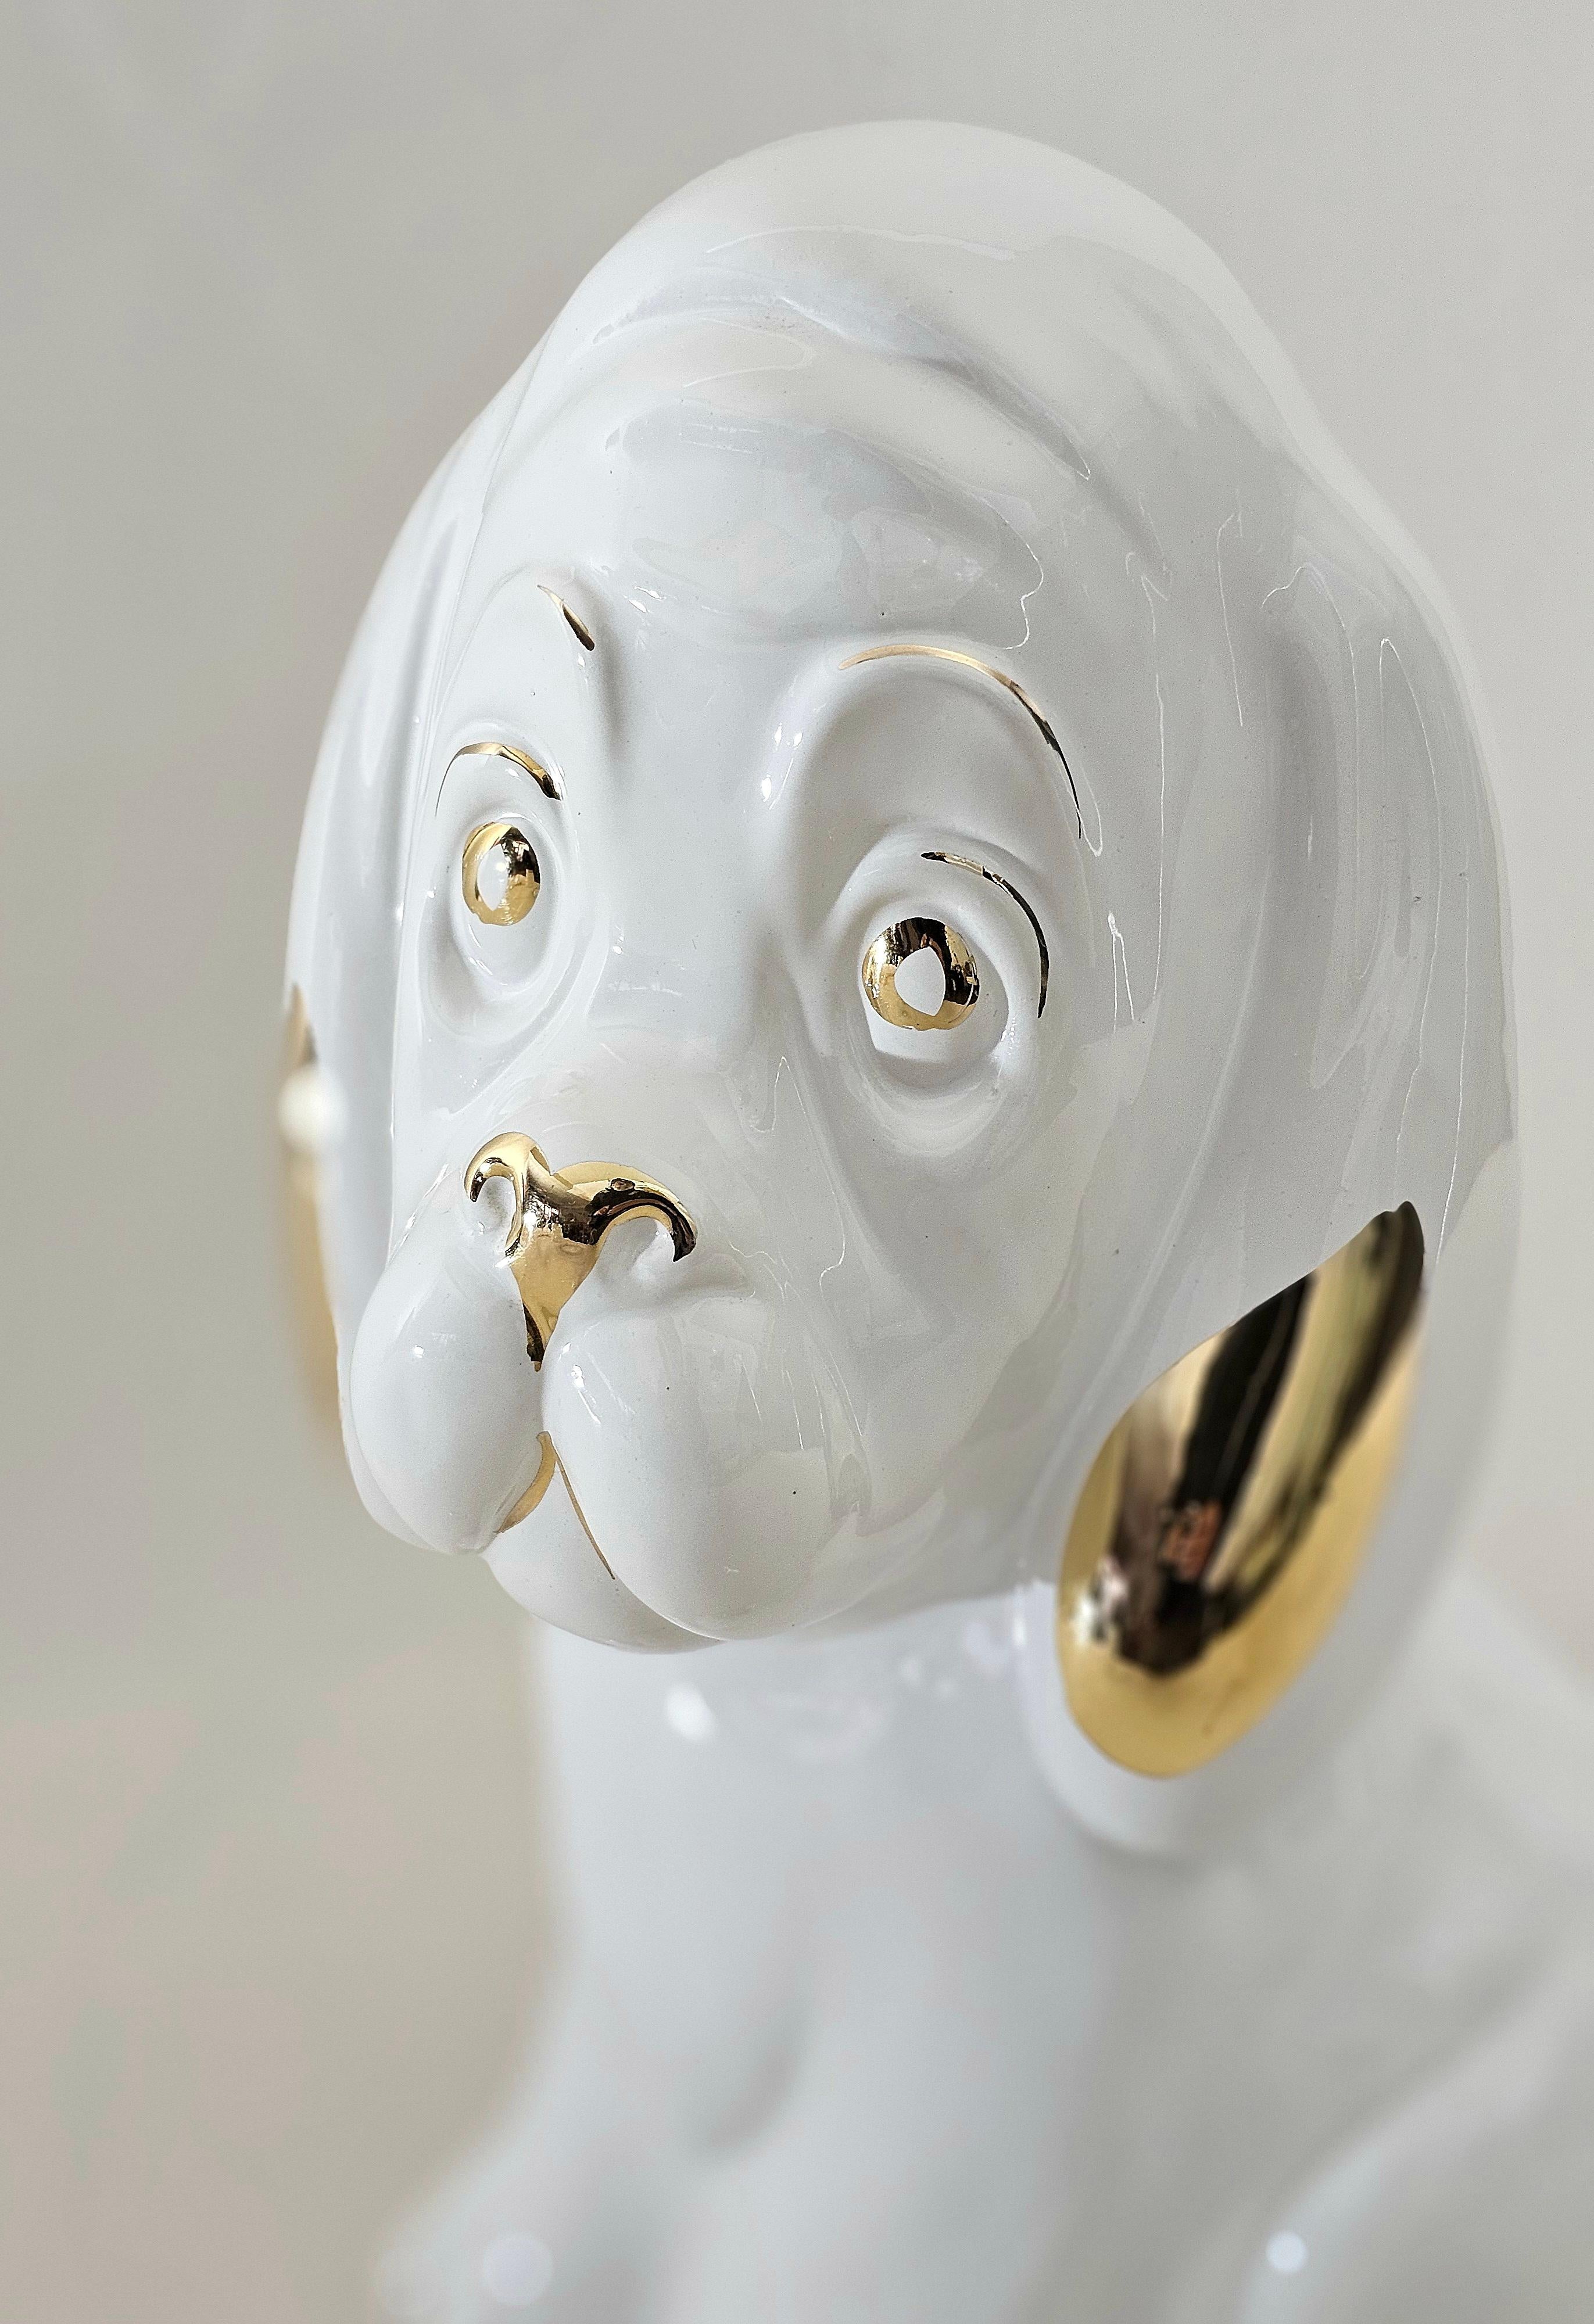 20th Century Decorative Object Dog Porcelain Sculpture Midcentury Modern Italian Design 1970s For Sale